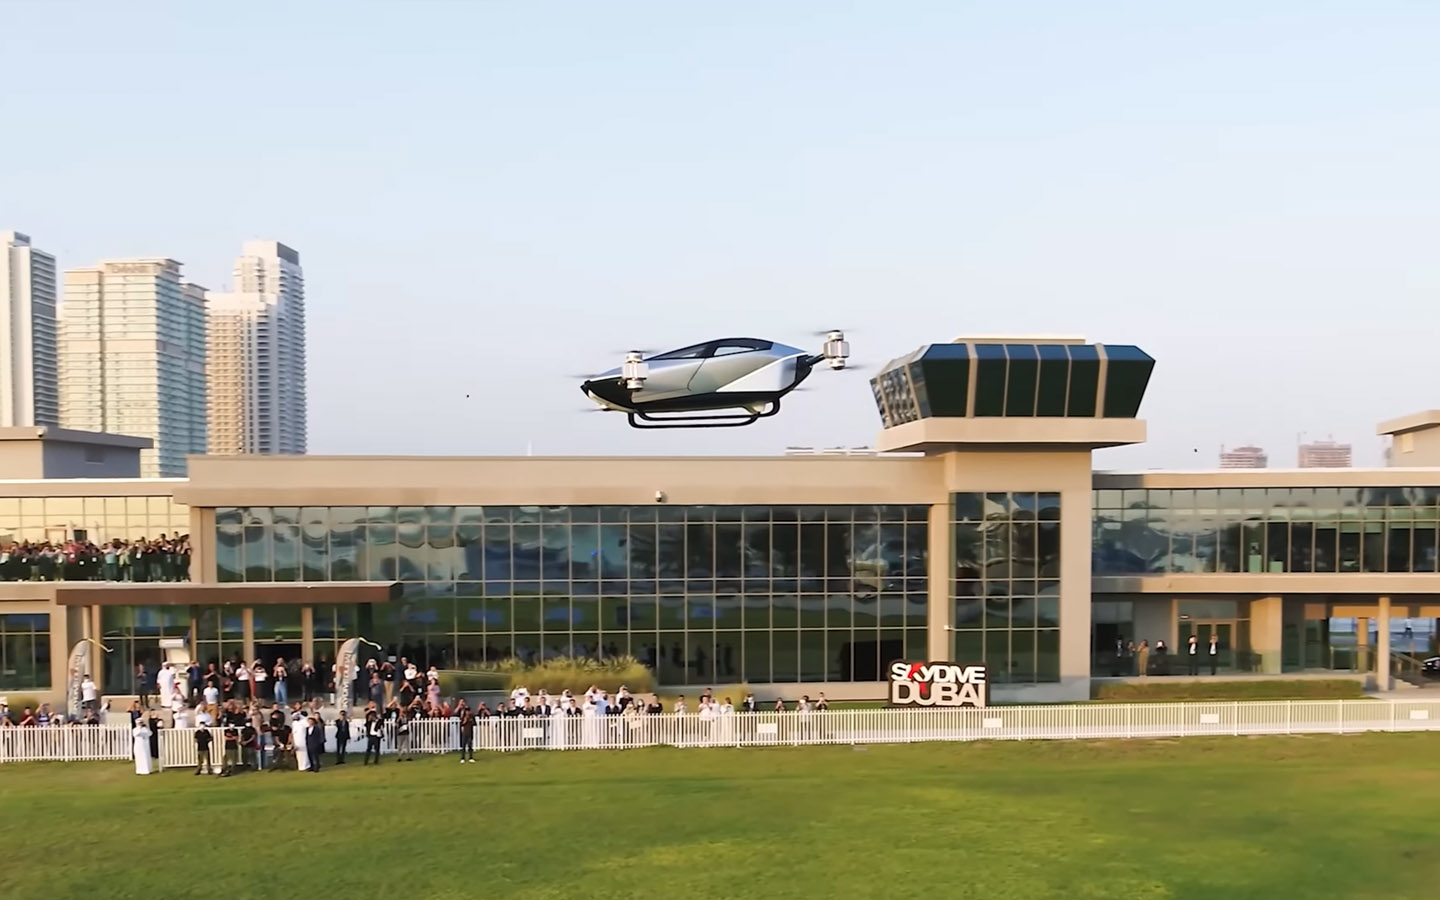 flying car took first flight at Skydive  Dubai